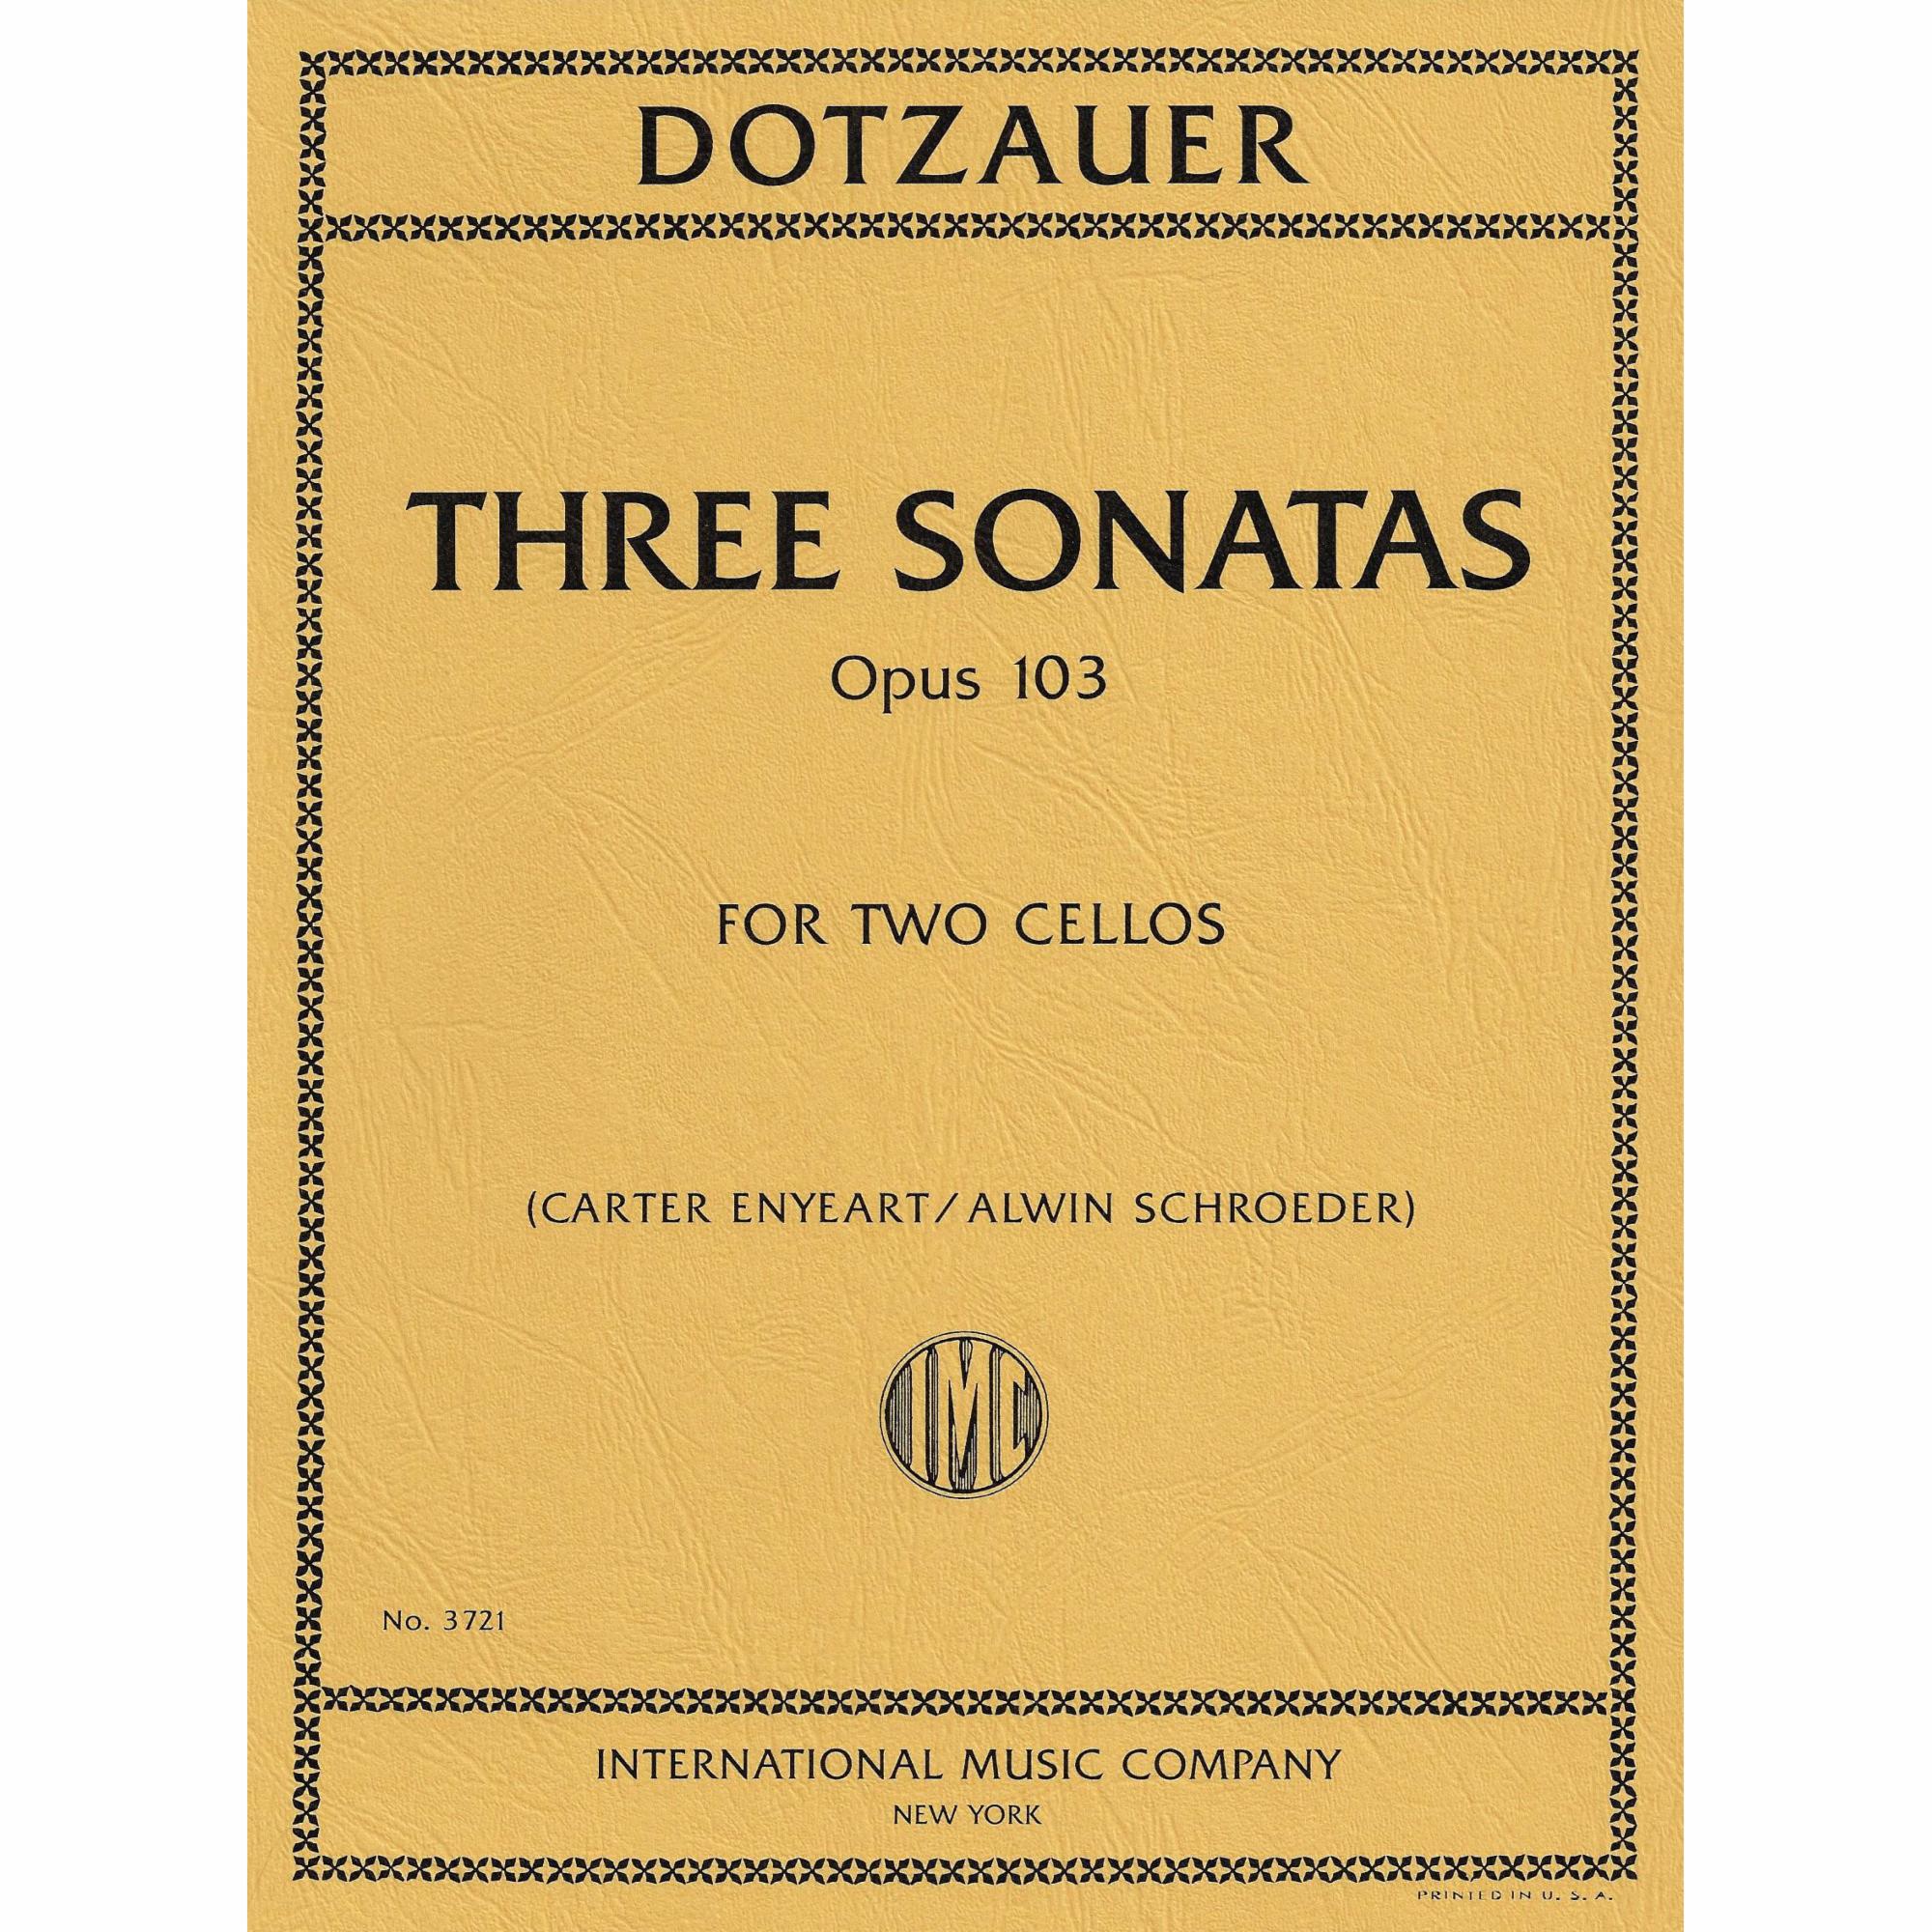 Dotzauer -- Three Sonatas, Op. 103 for Two Cellos